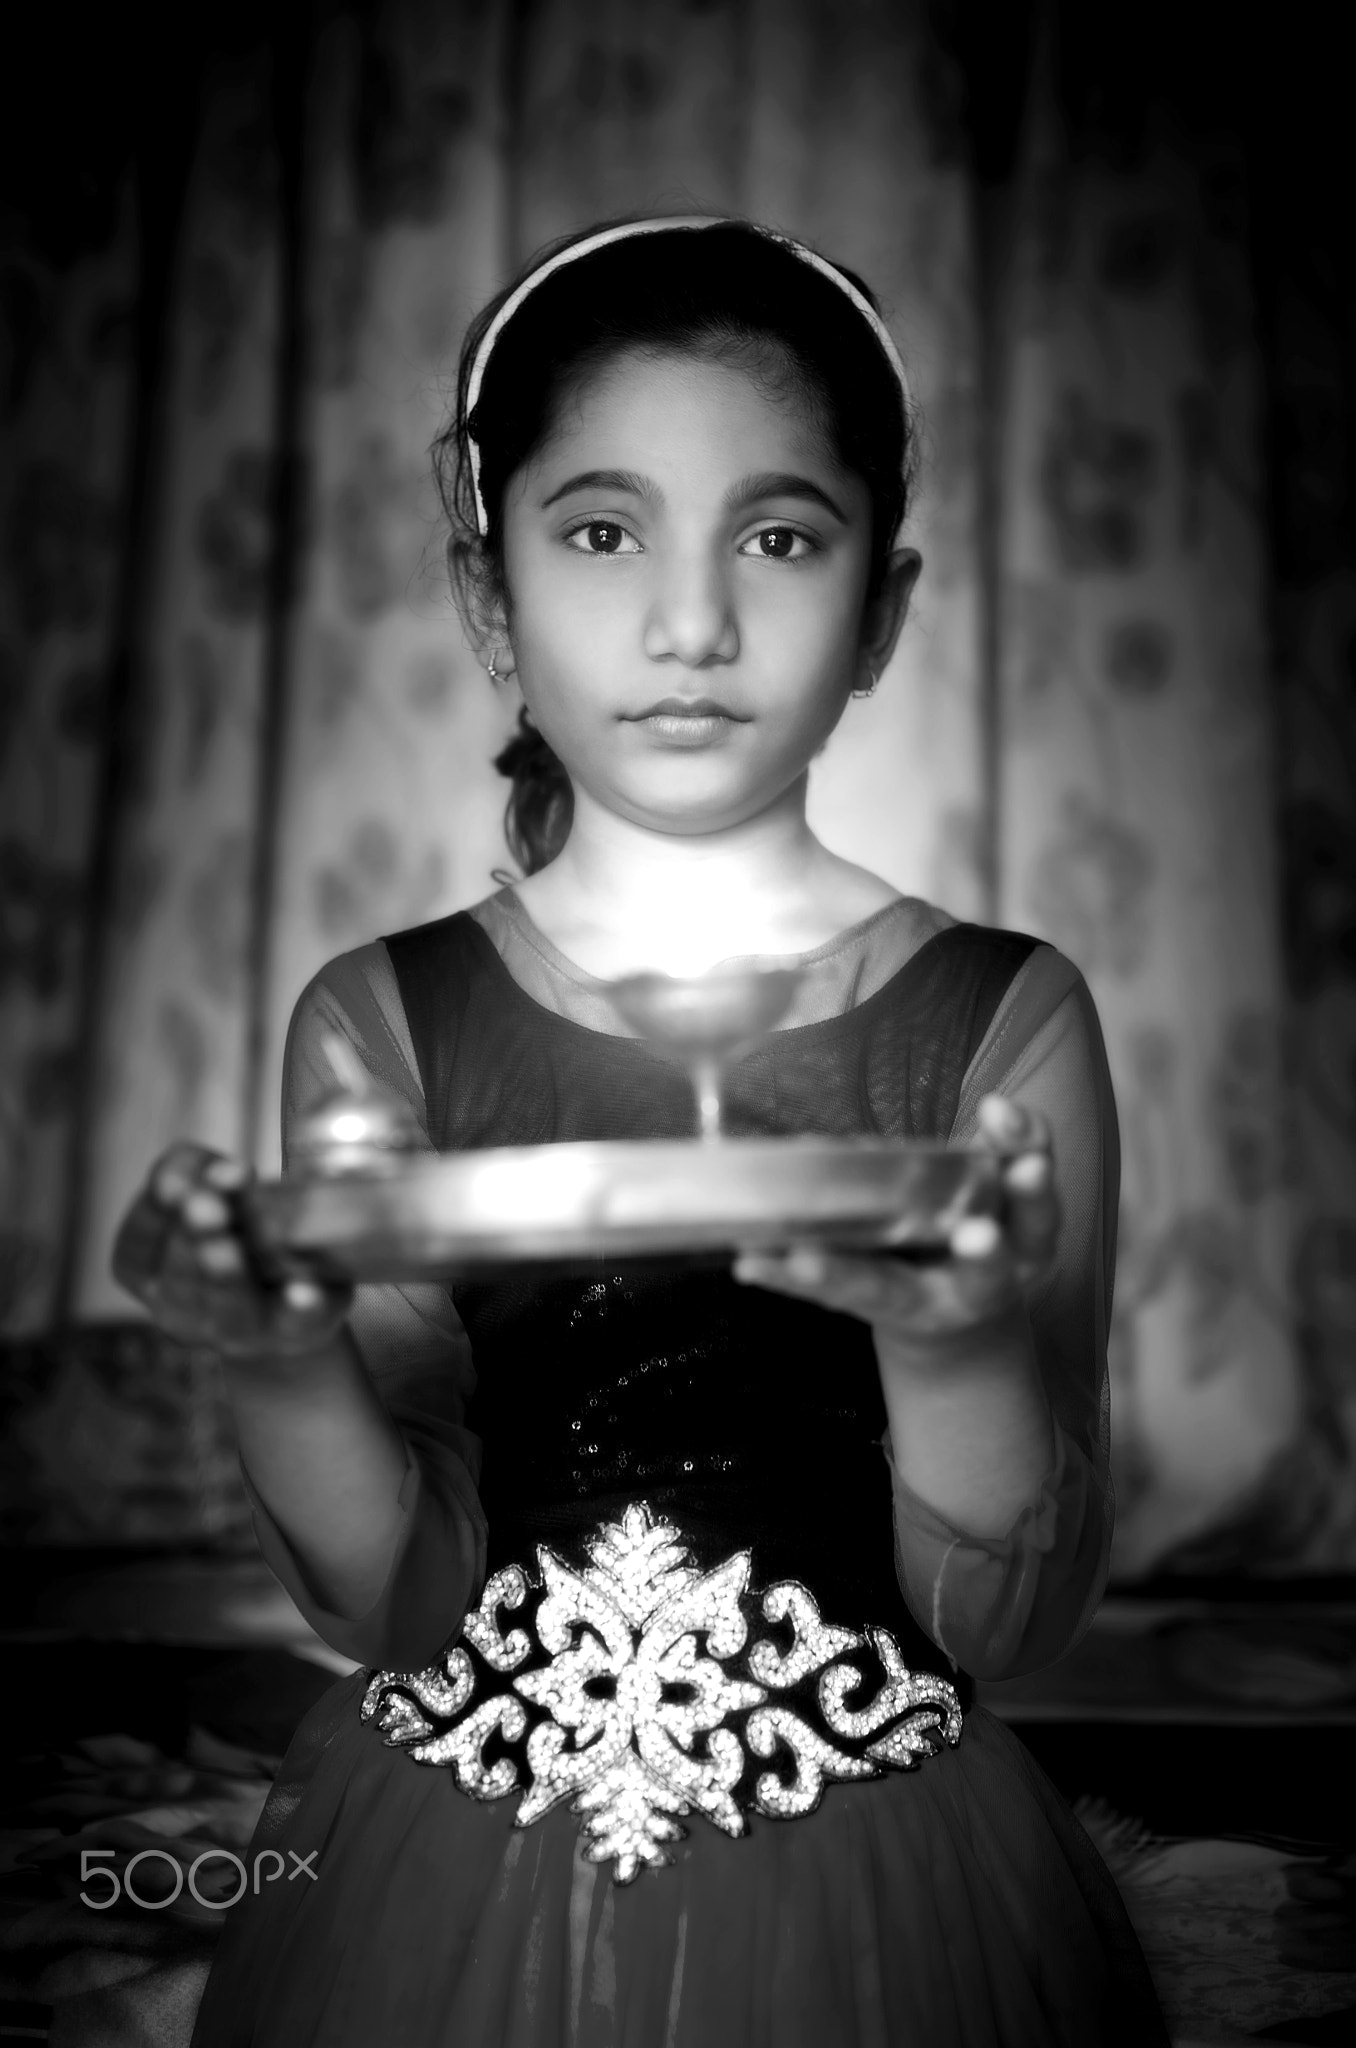 girl child portrait welcoming monochrome